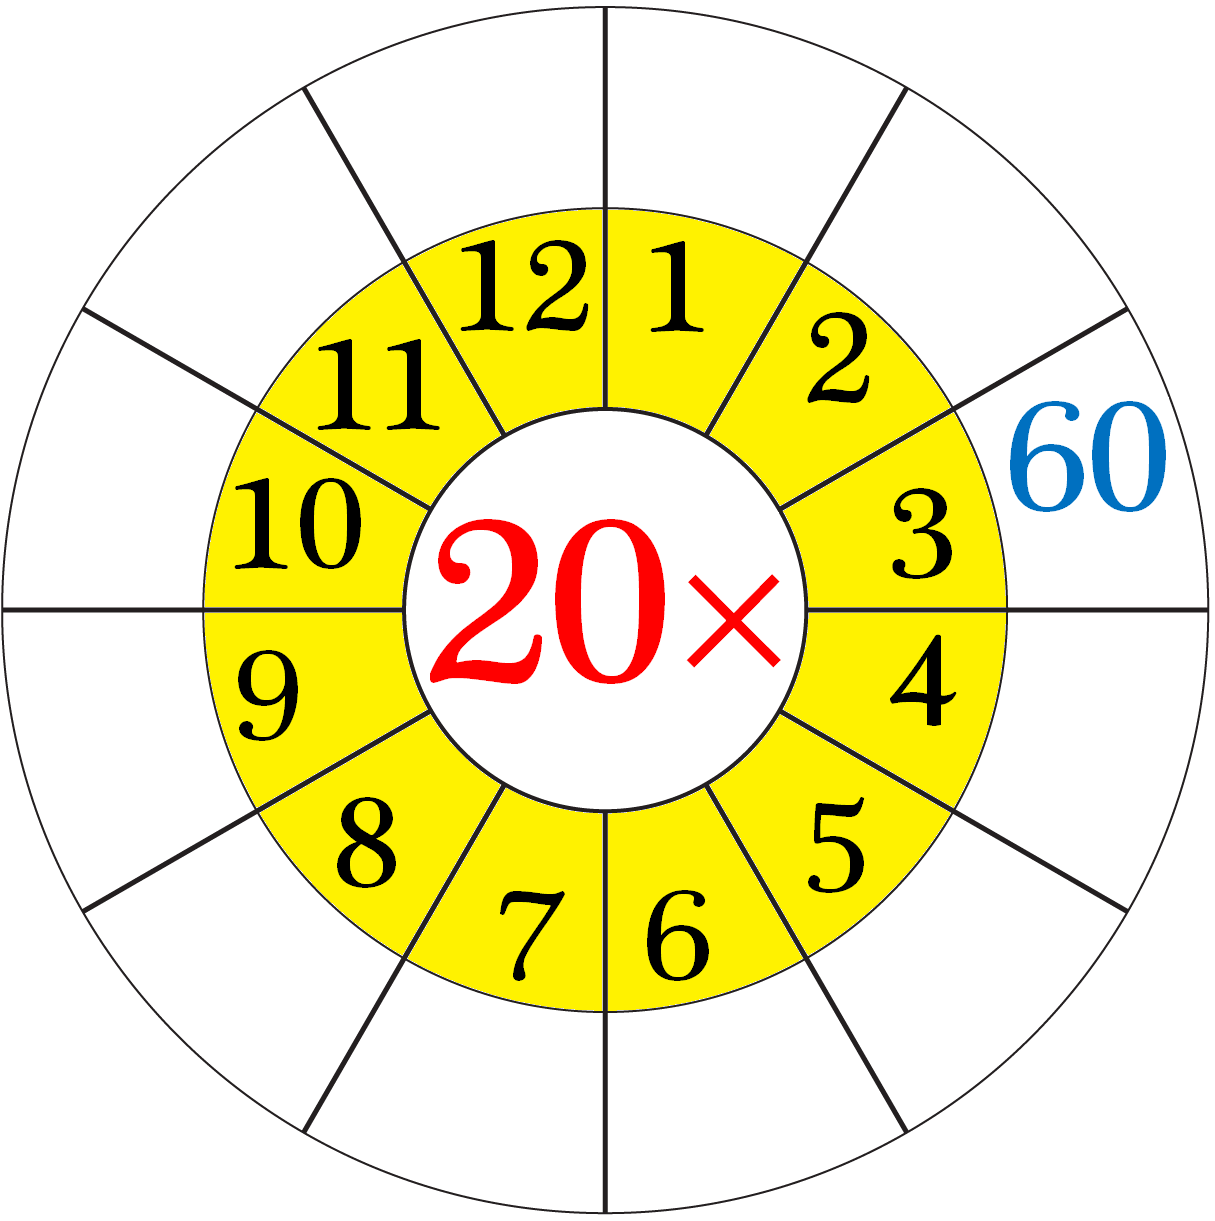 Worksheet on Multiplication Table of 20